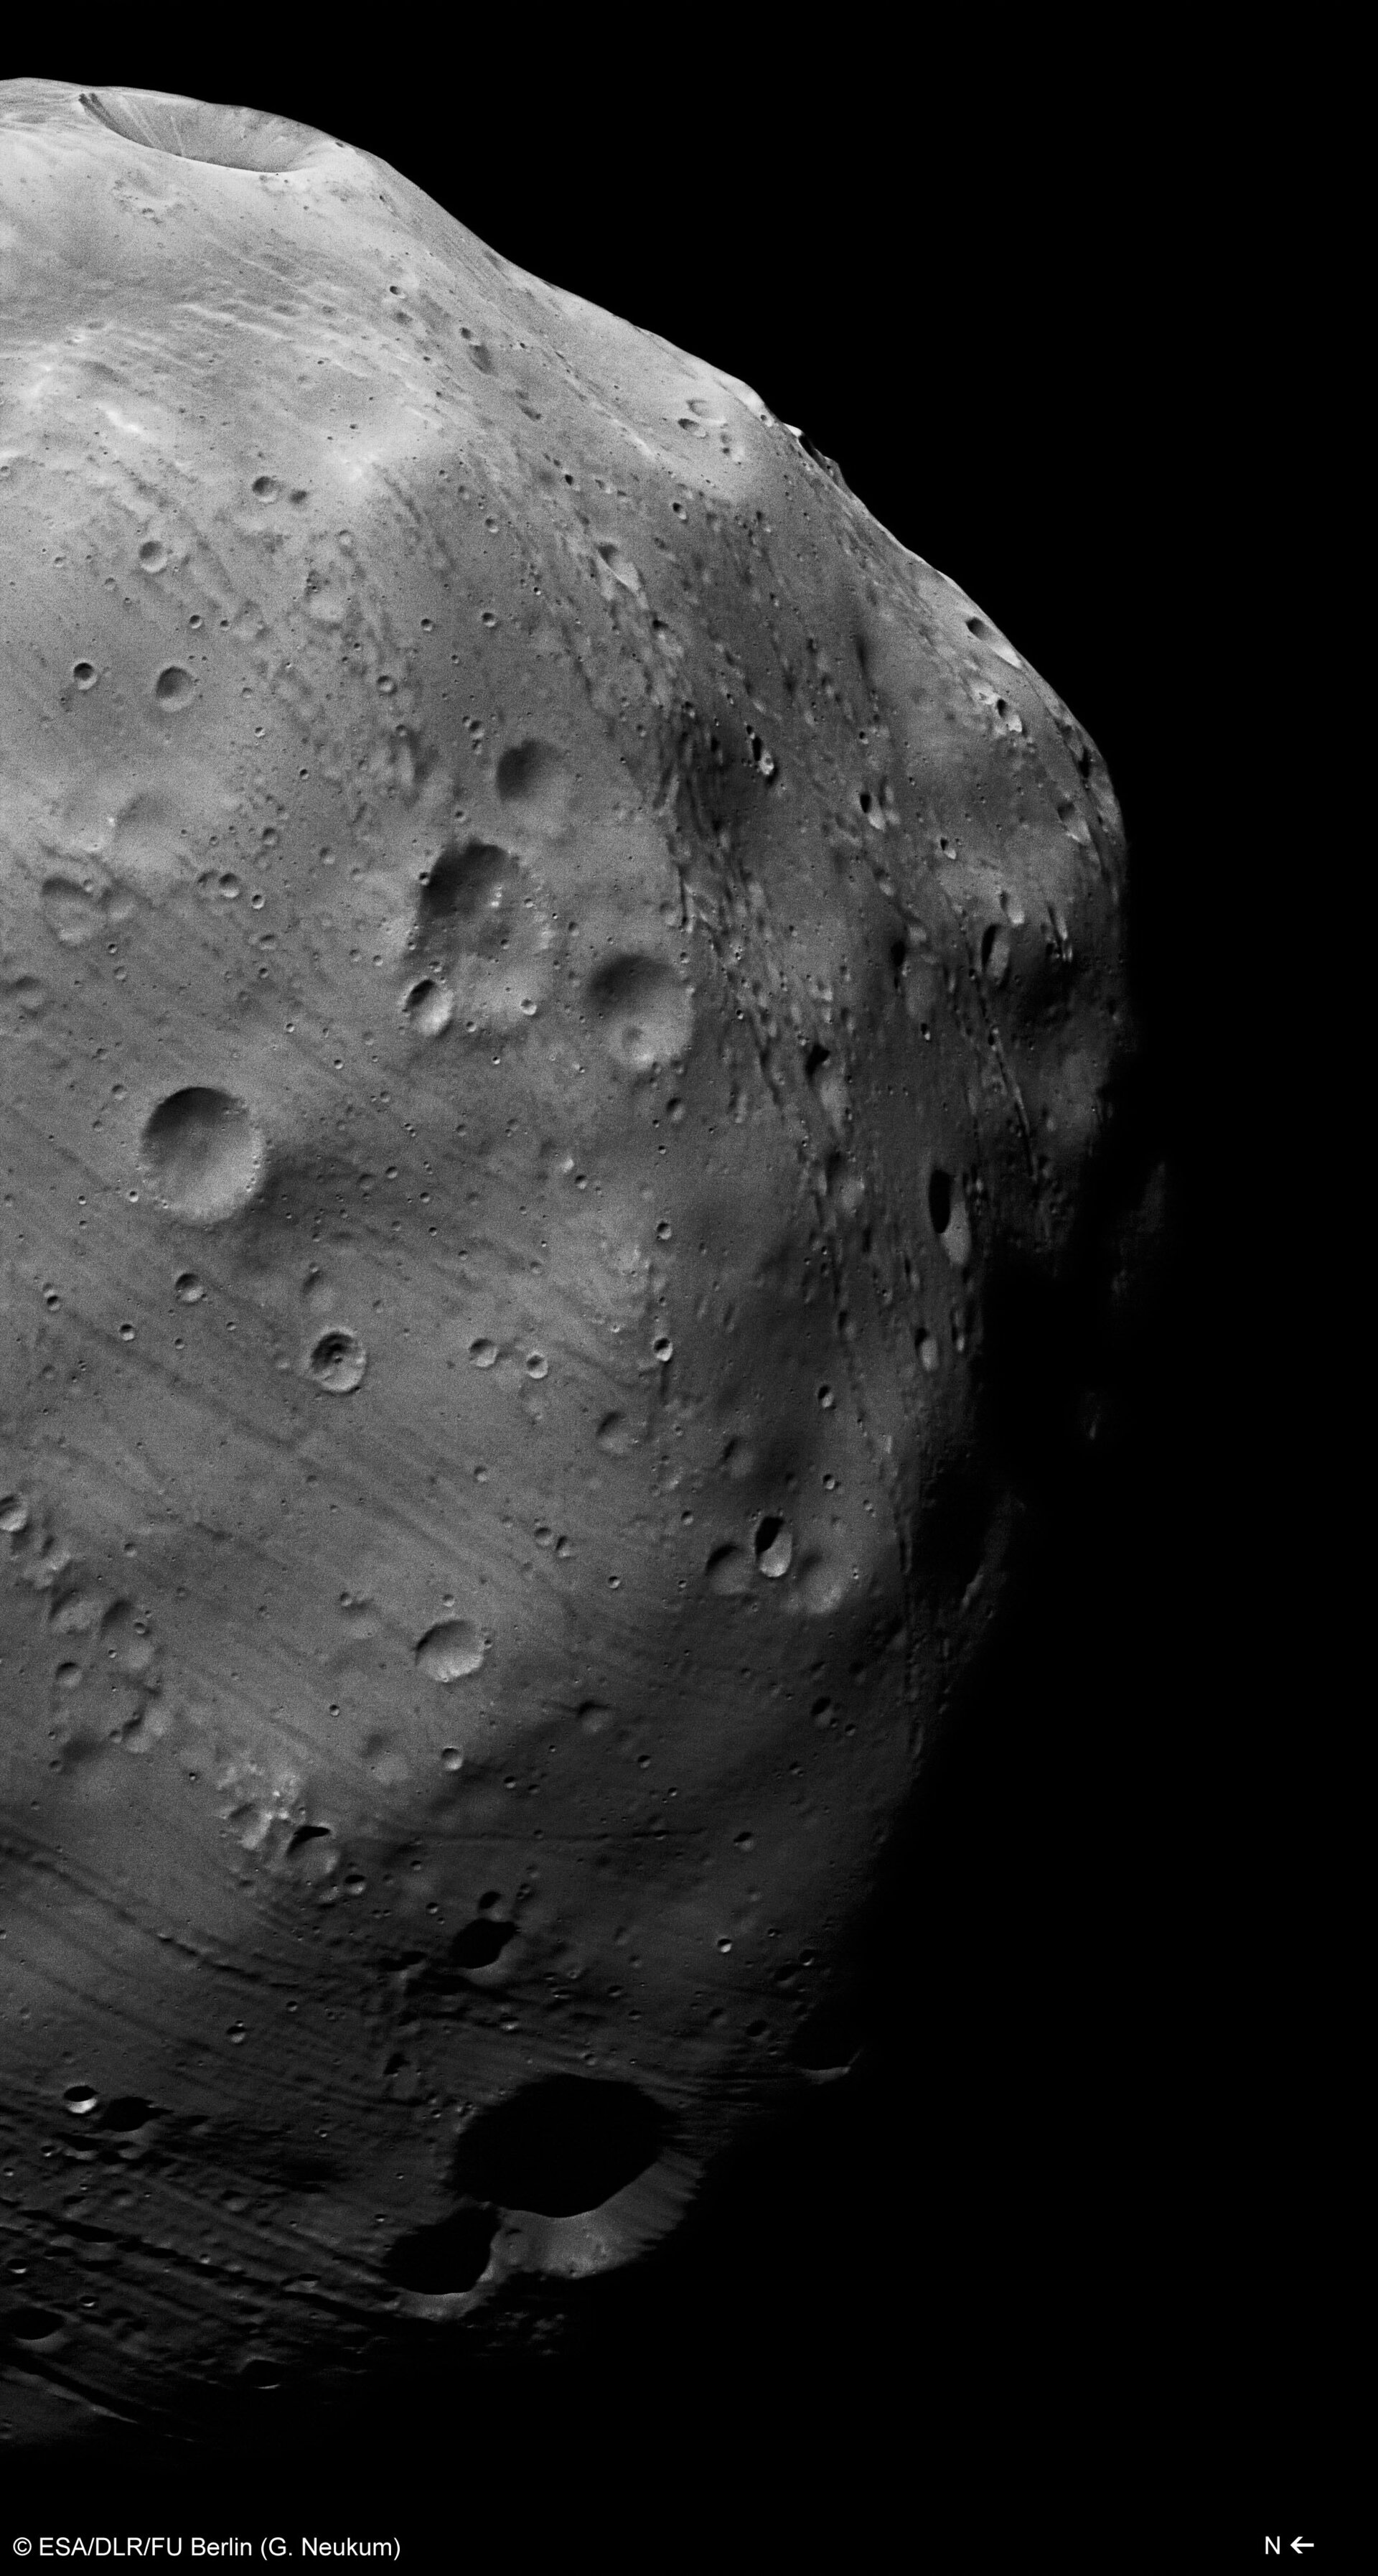 Mars Express HRSC image of Phobos, taken on 7 March 2010